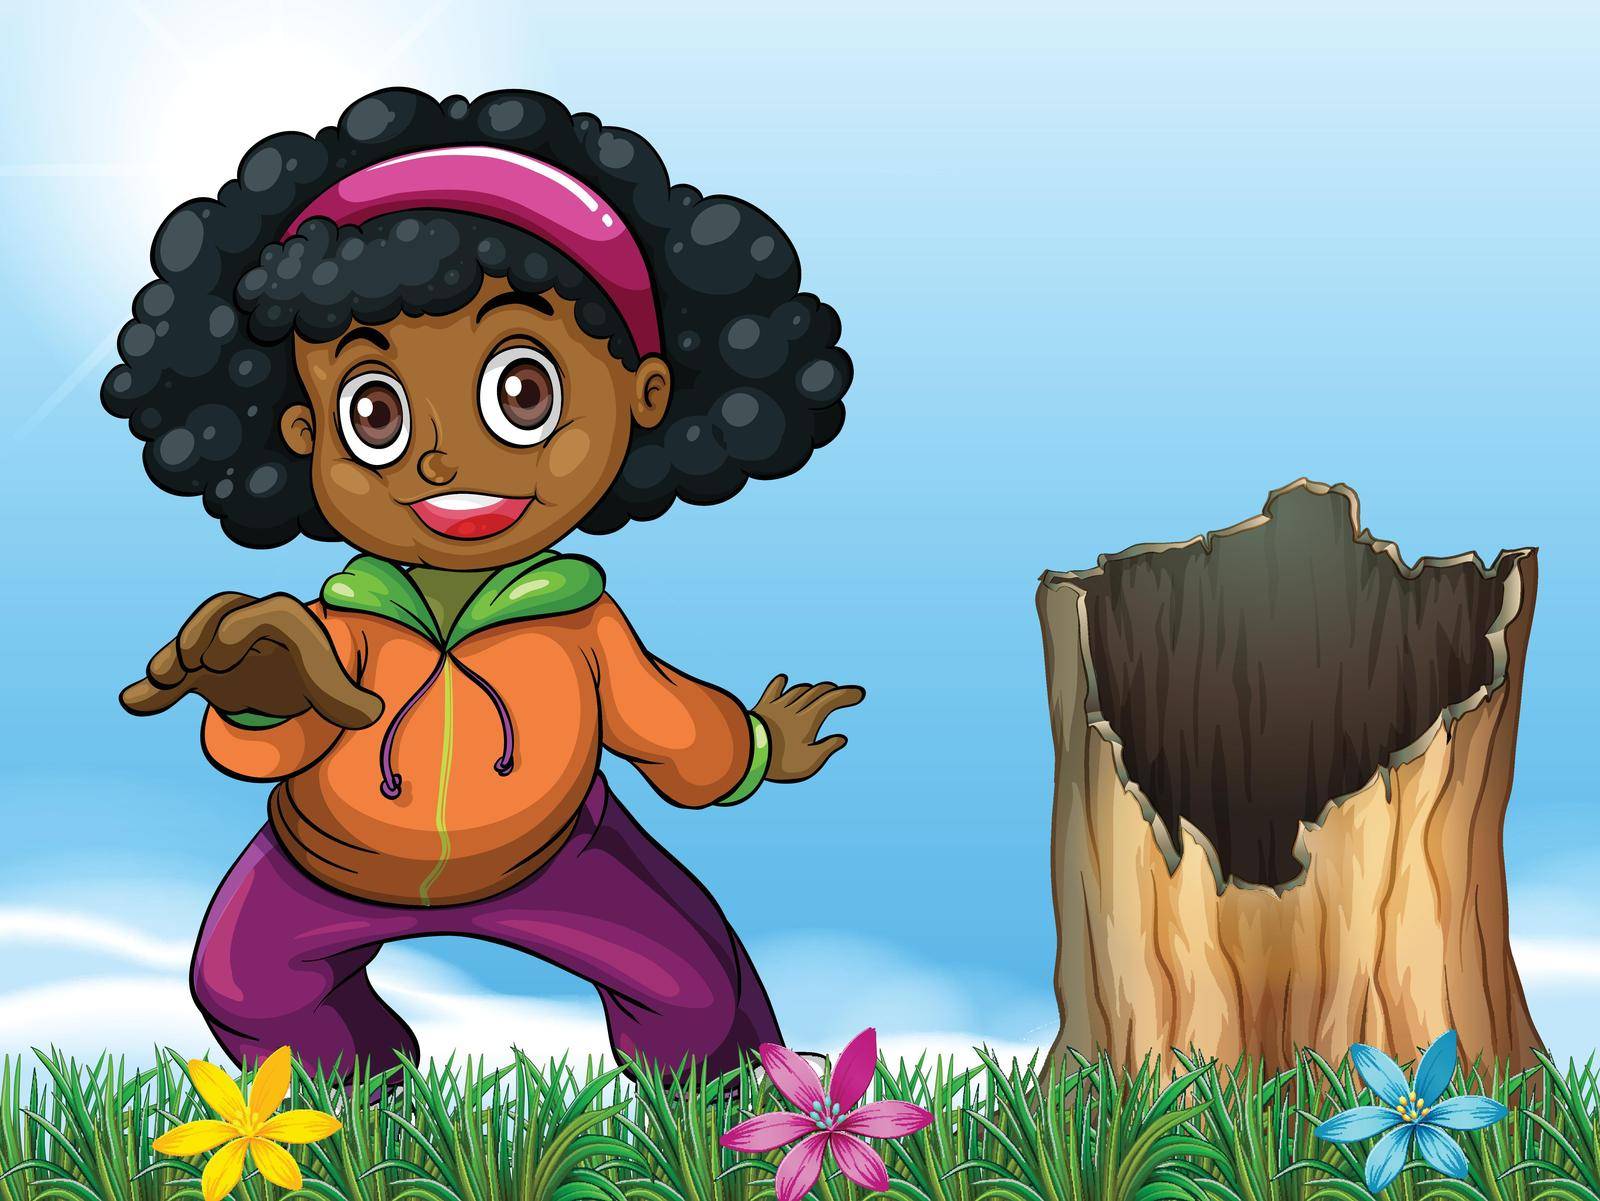 Illustration of a girl beside the stump